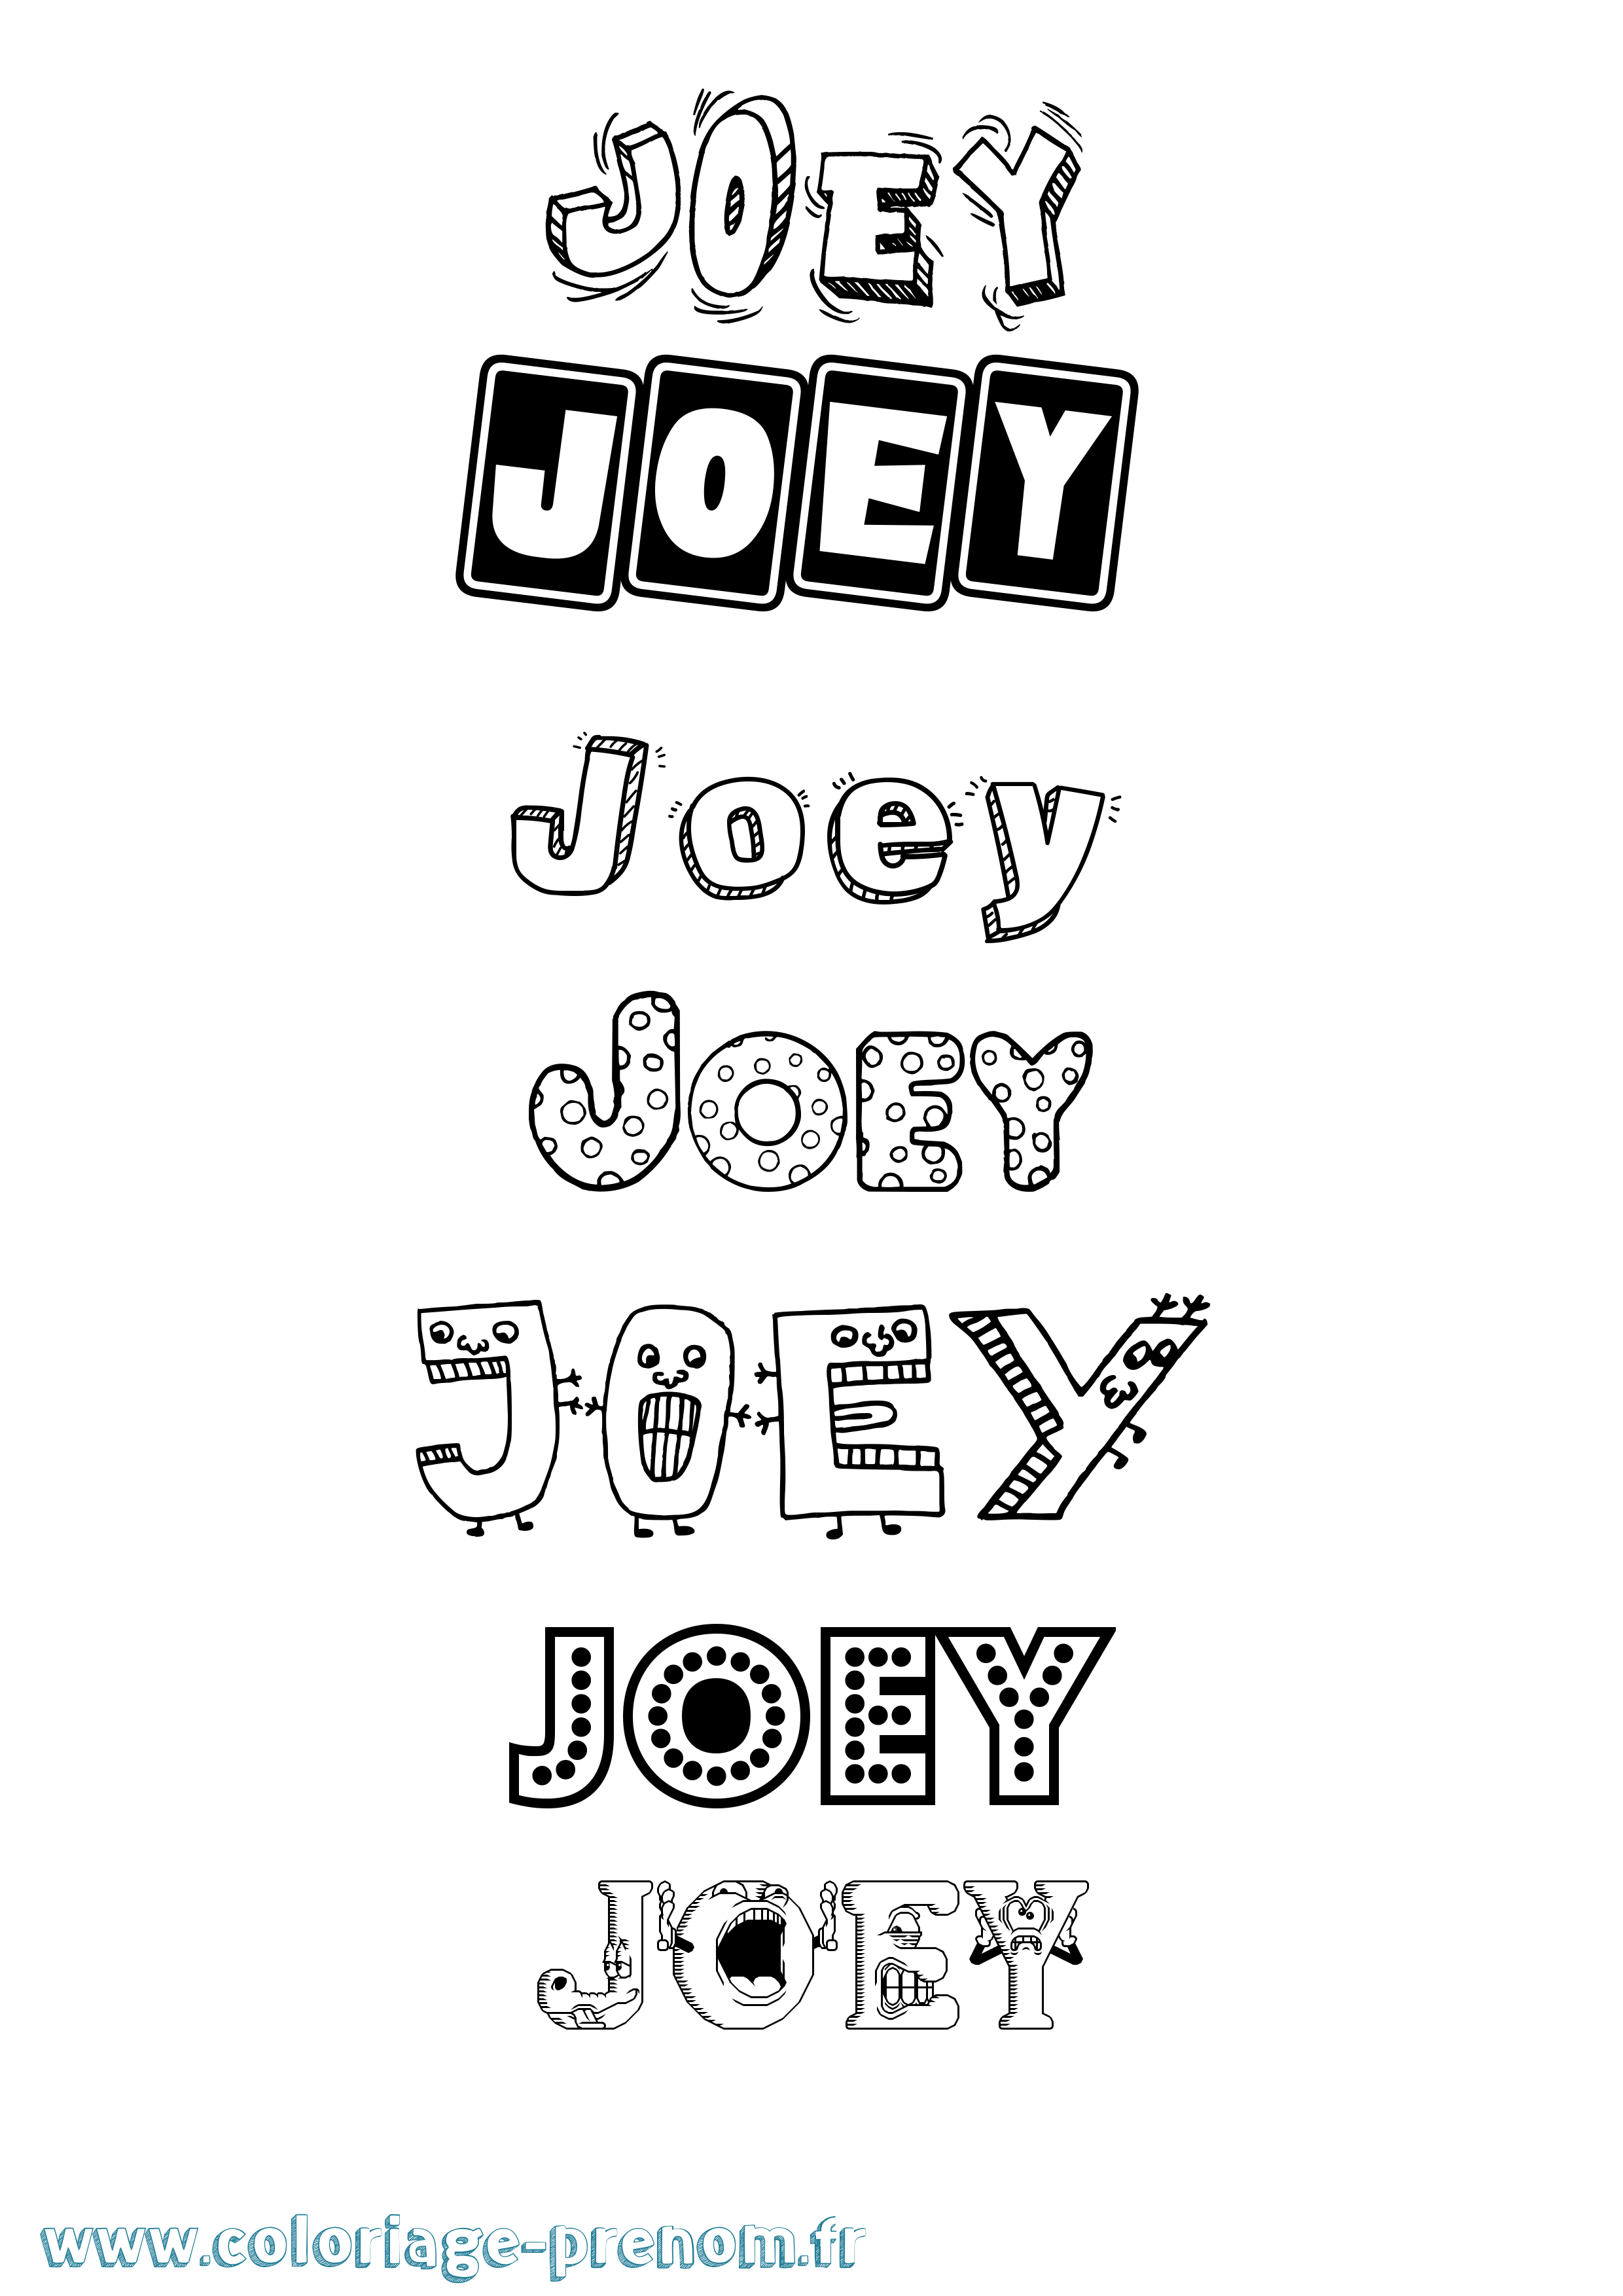 Coloriage prénom Joey